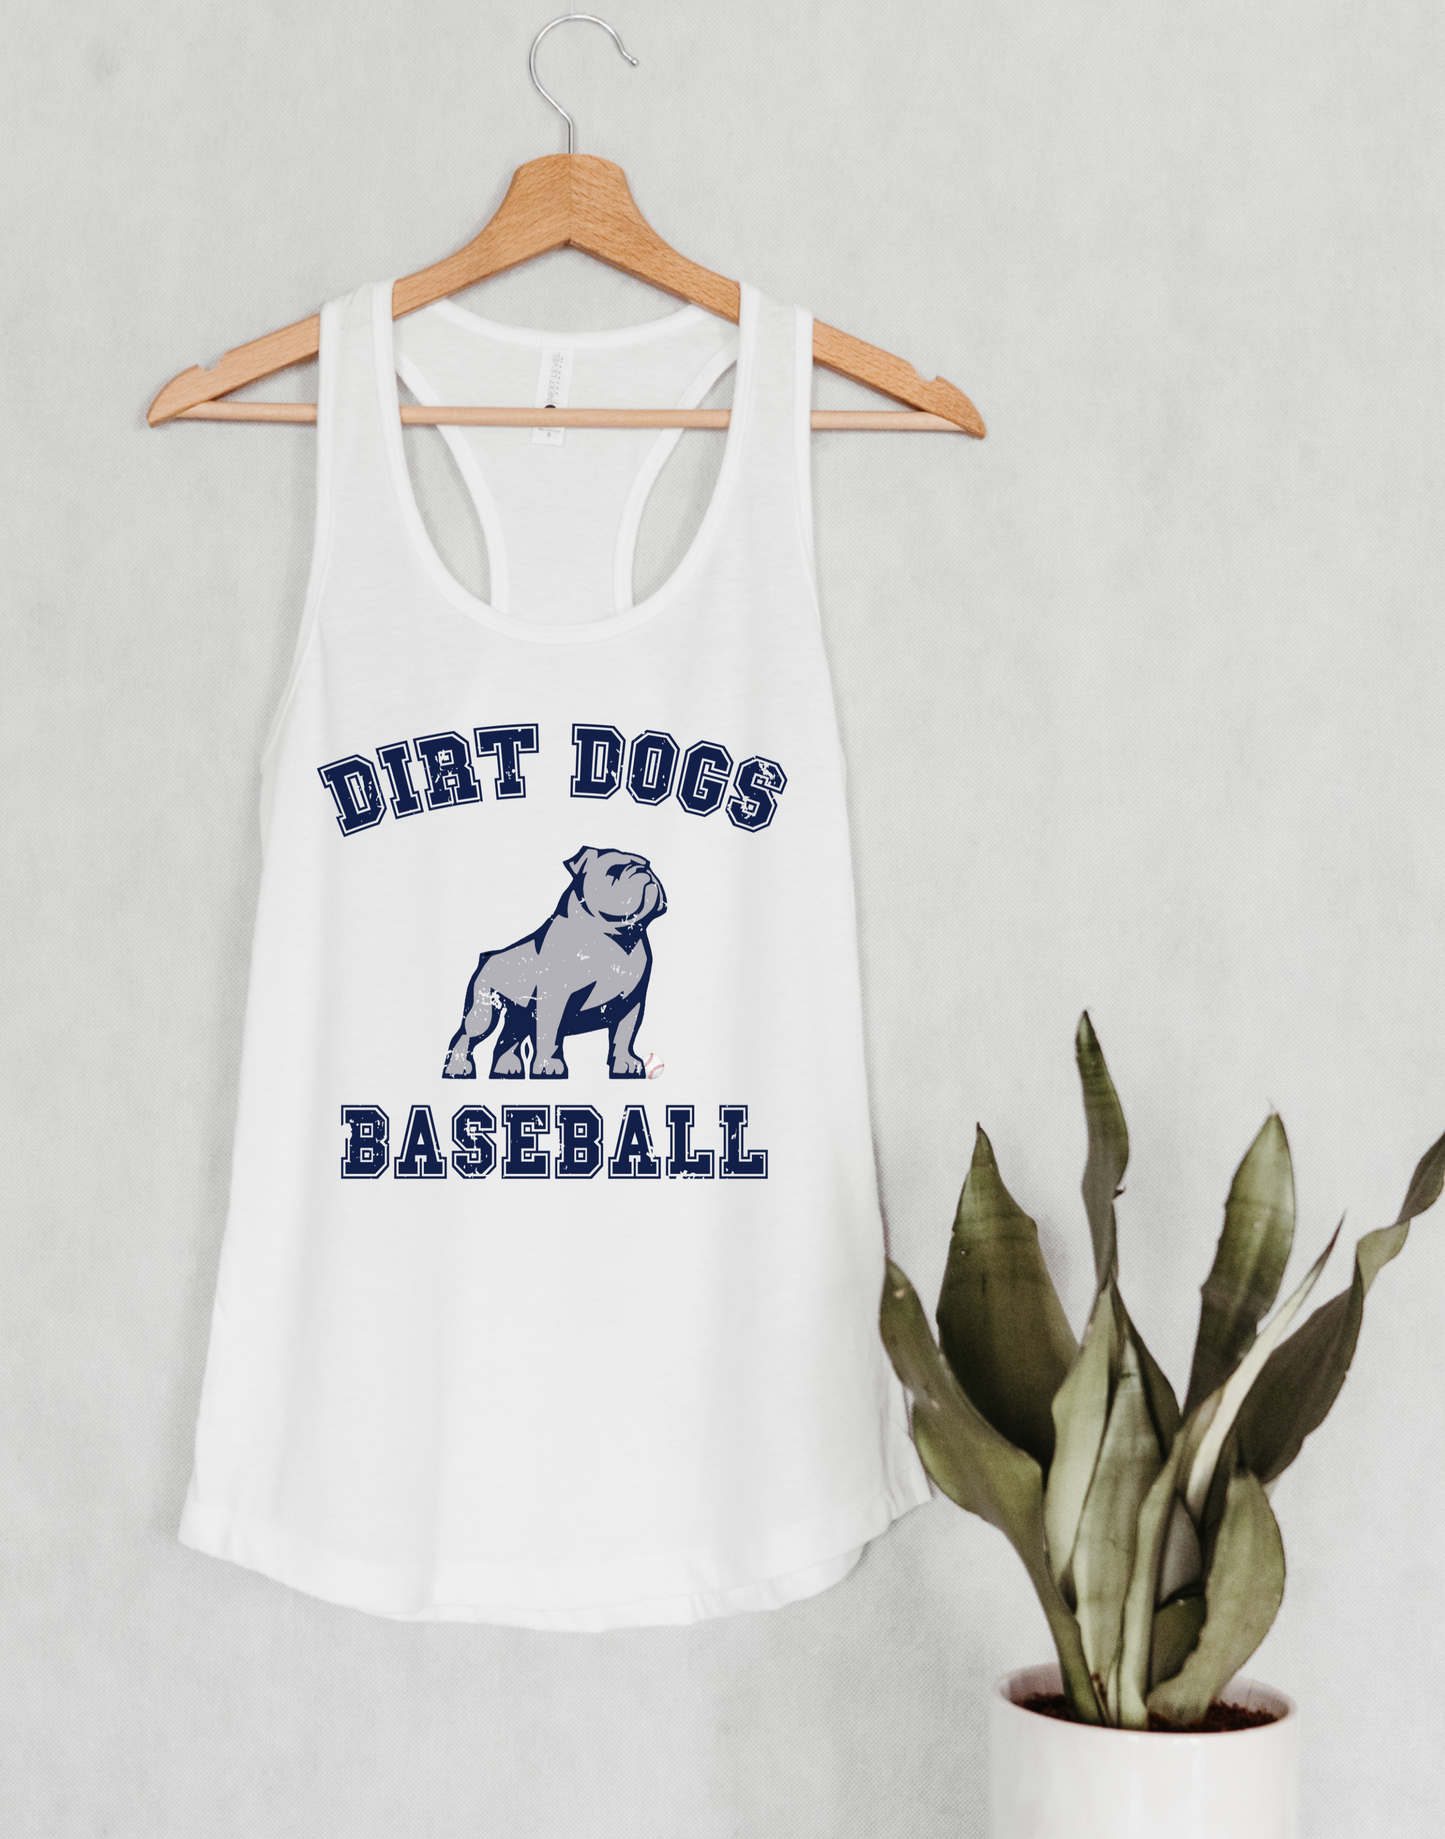 Dirt Dogs Tanks